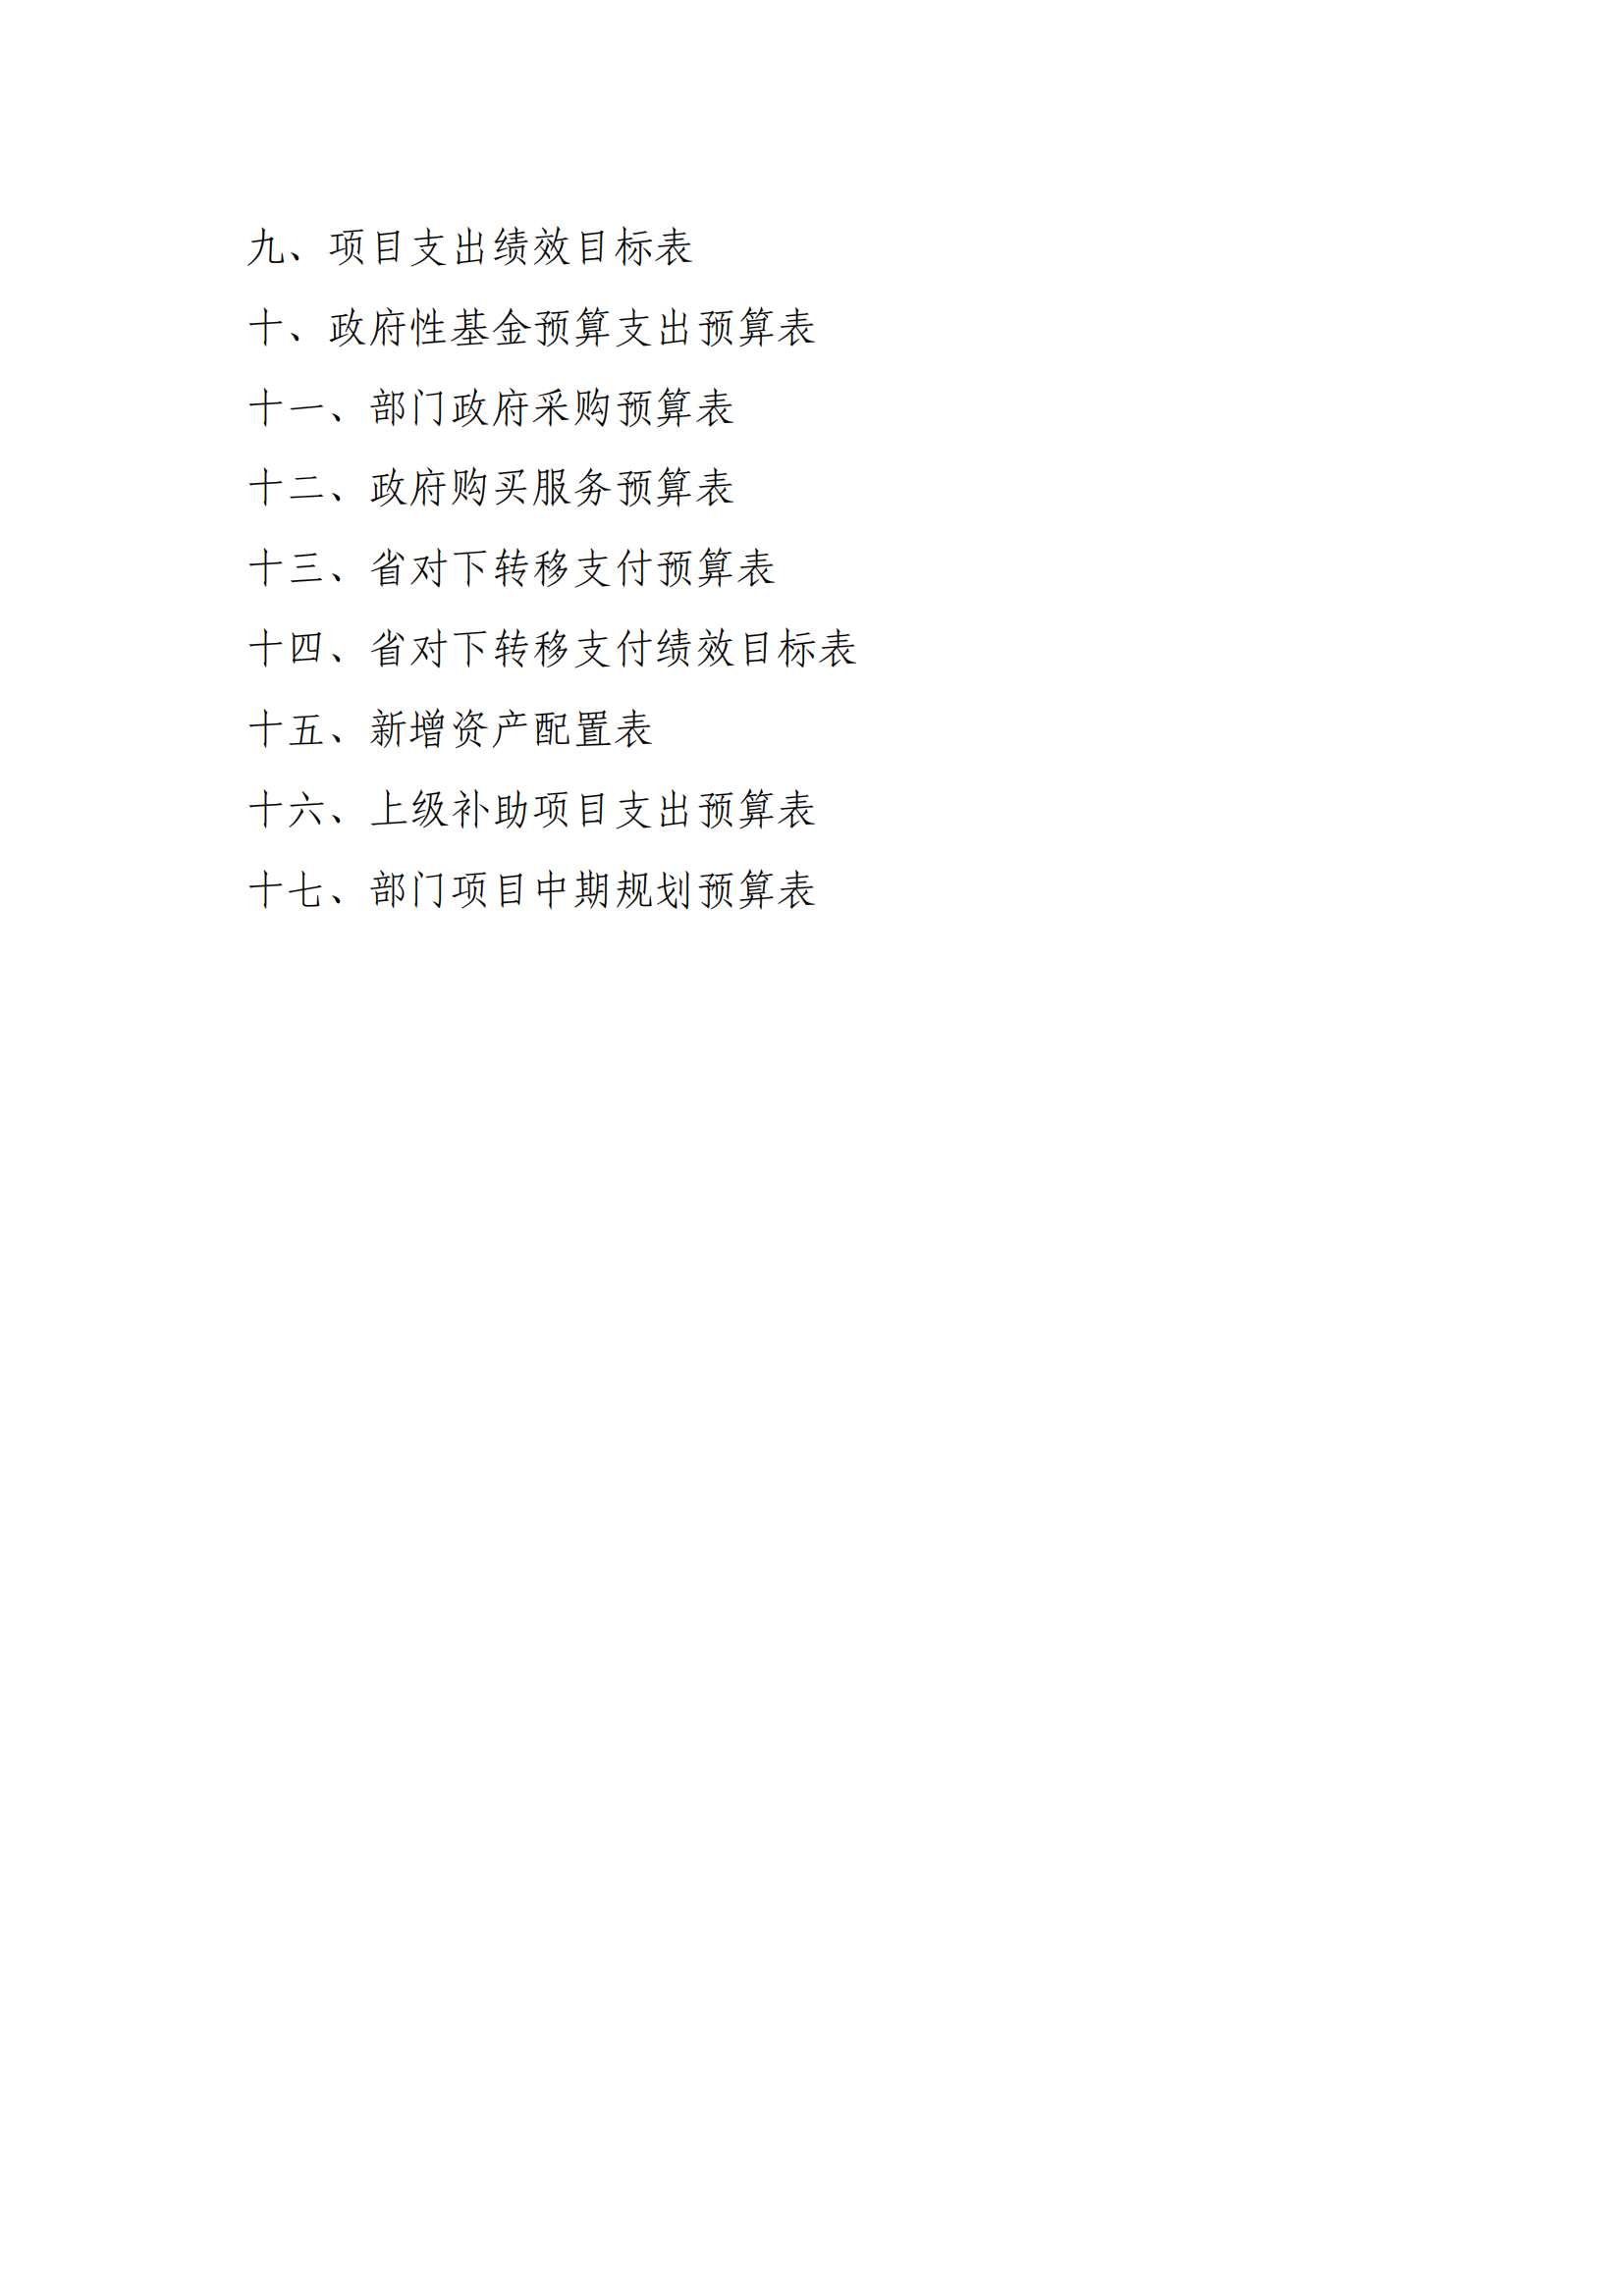 gongkaishuoming_2_180910027_云南省珠宝玉石质量监督检验研究院(1)_01.png